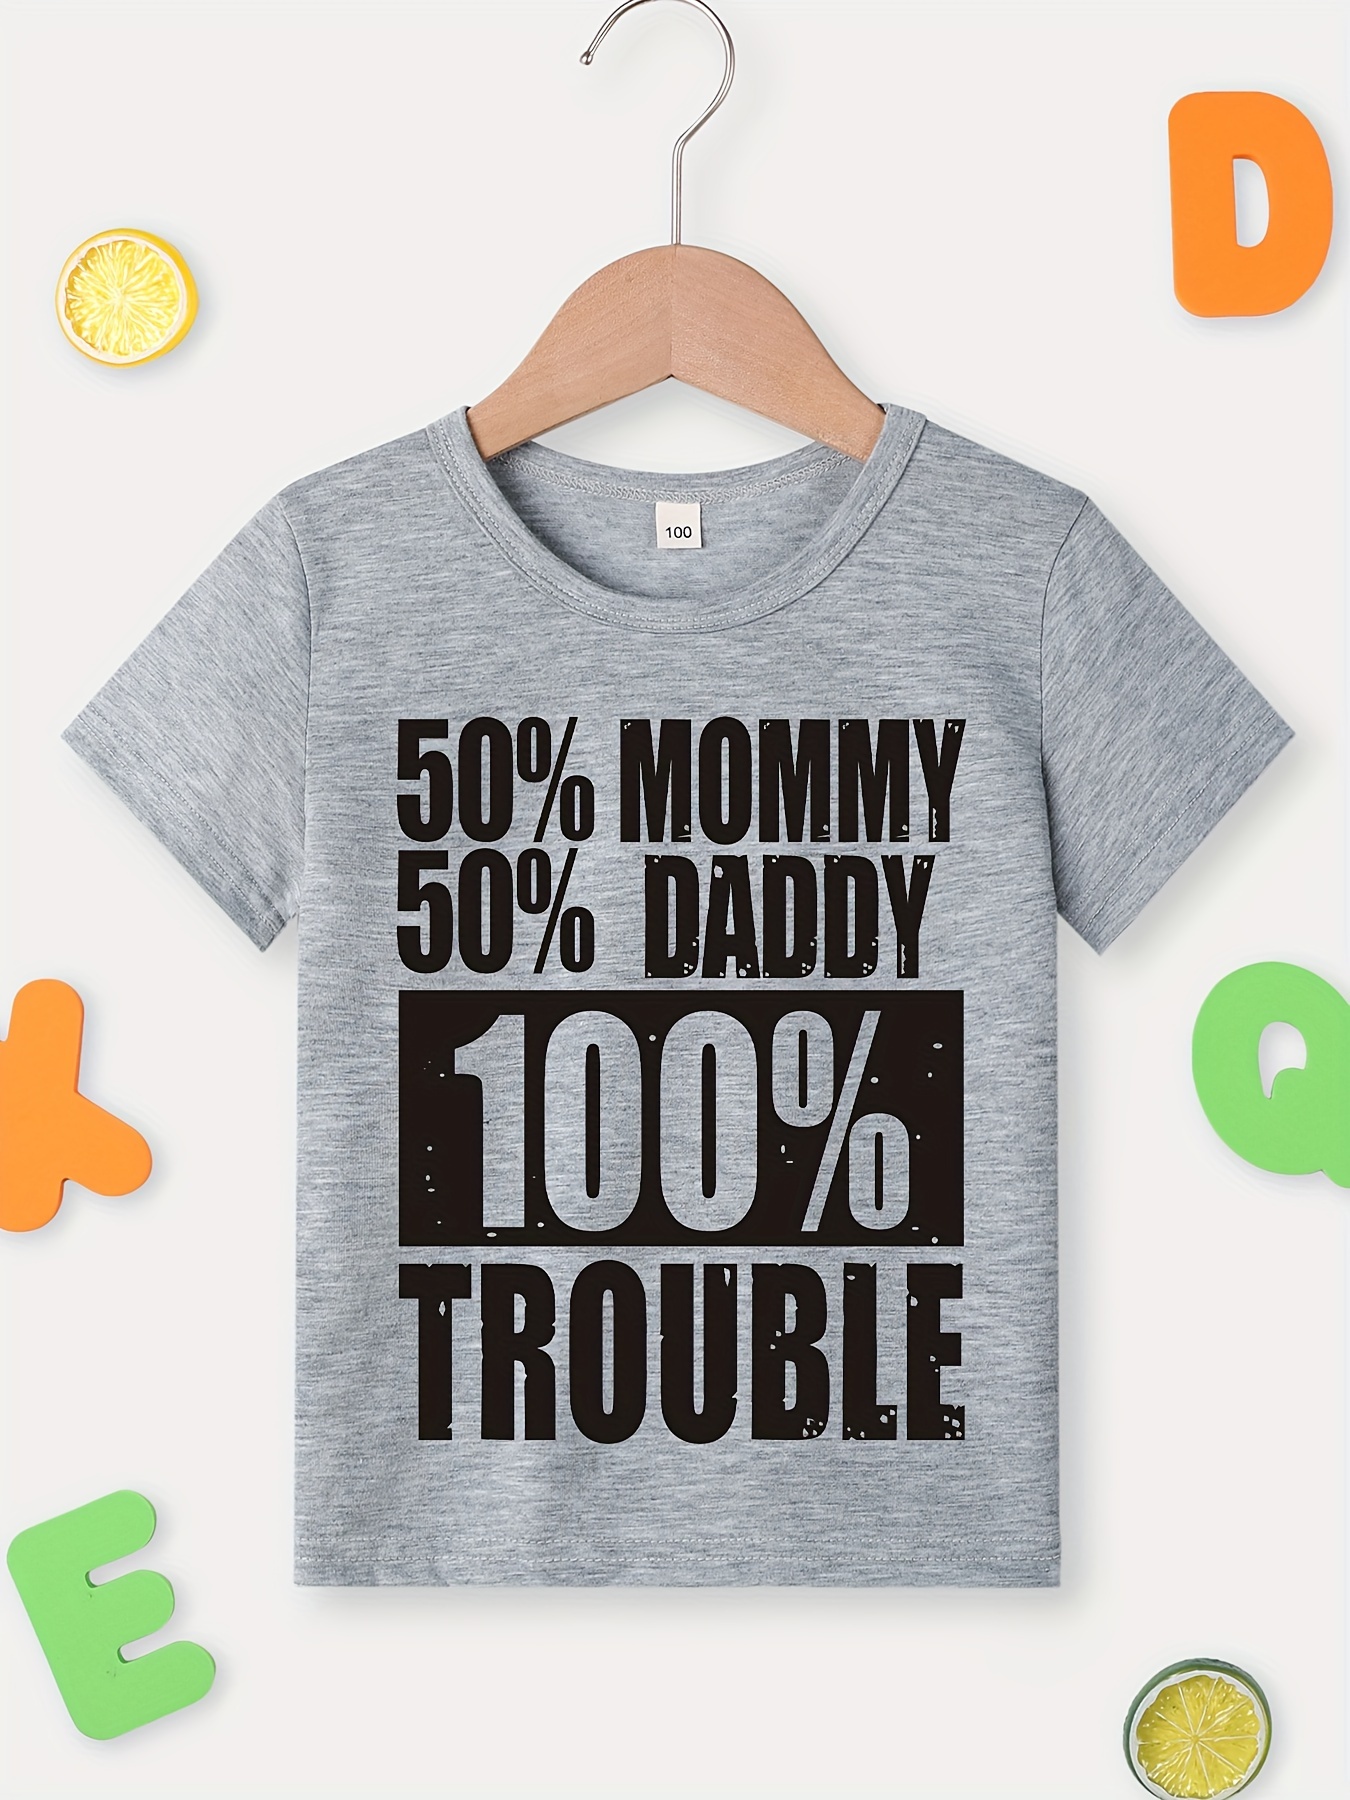 Girl Dad Triple D Shirt